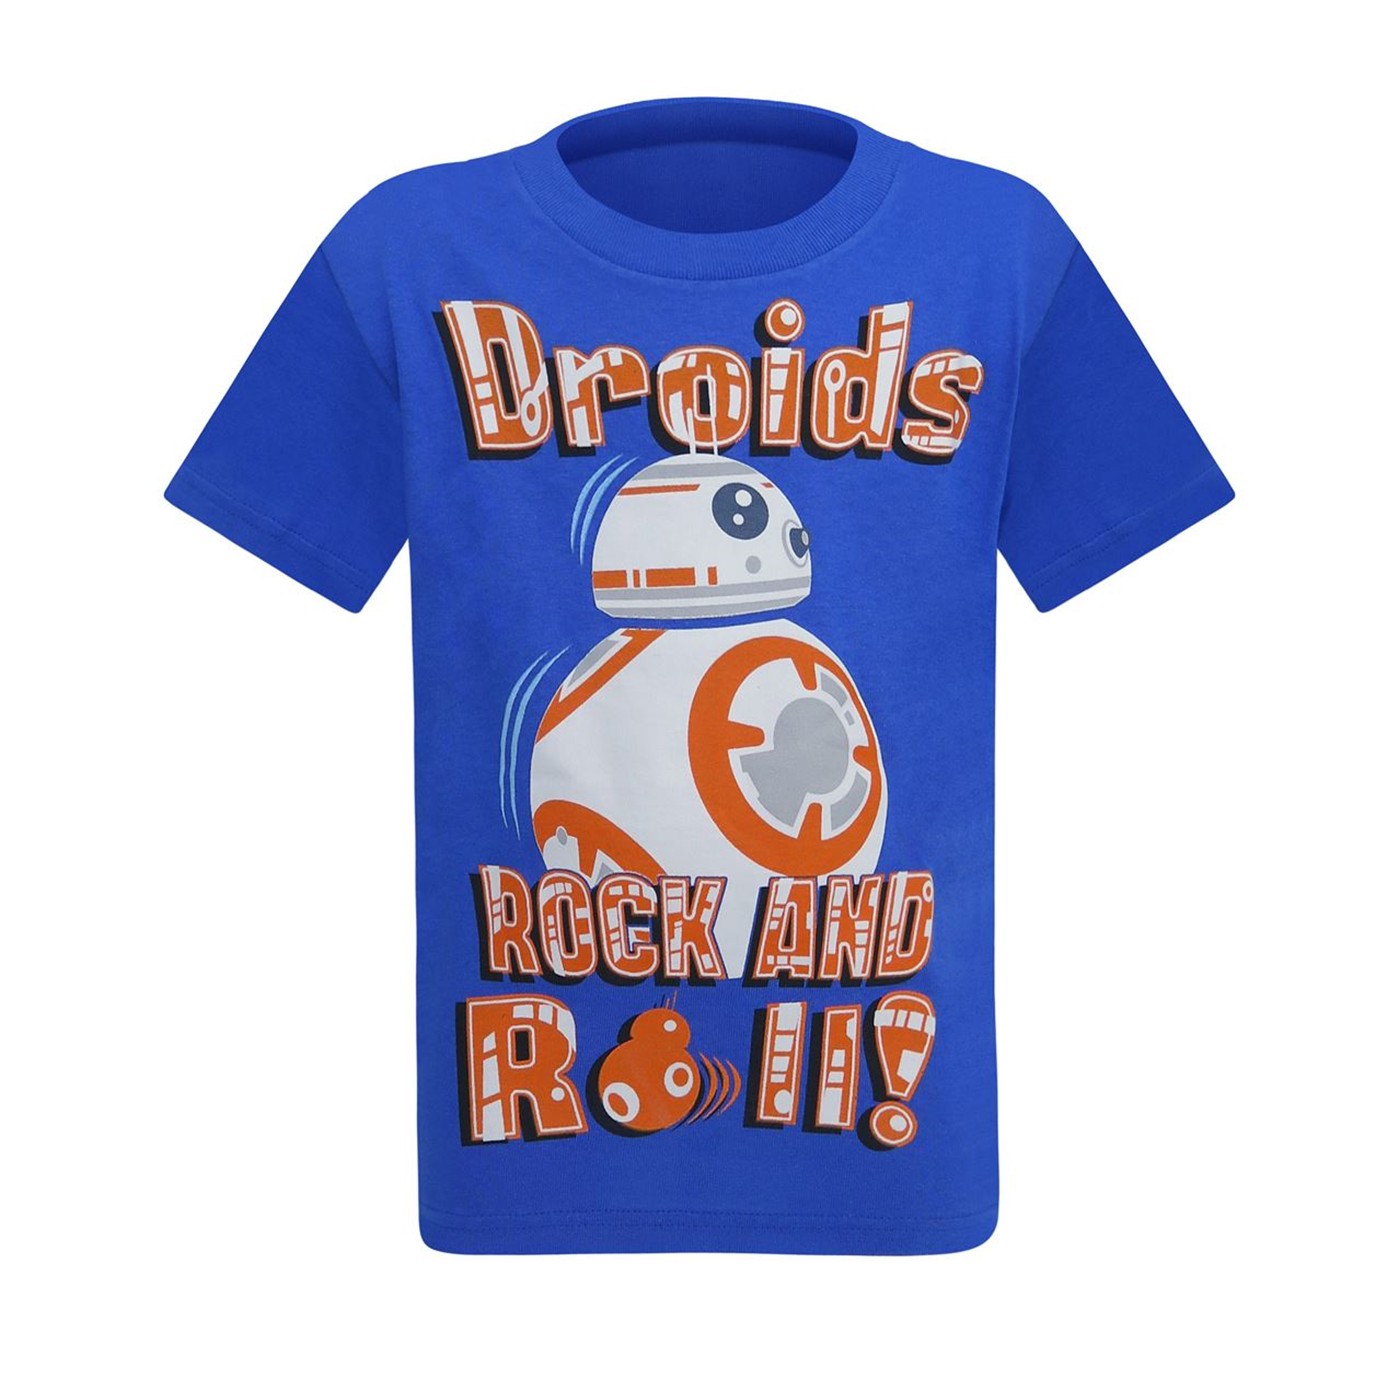 Star Wars BB-8 Droids Rock and Roll Kids T-Shirt